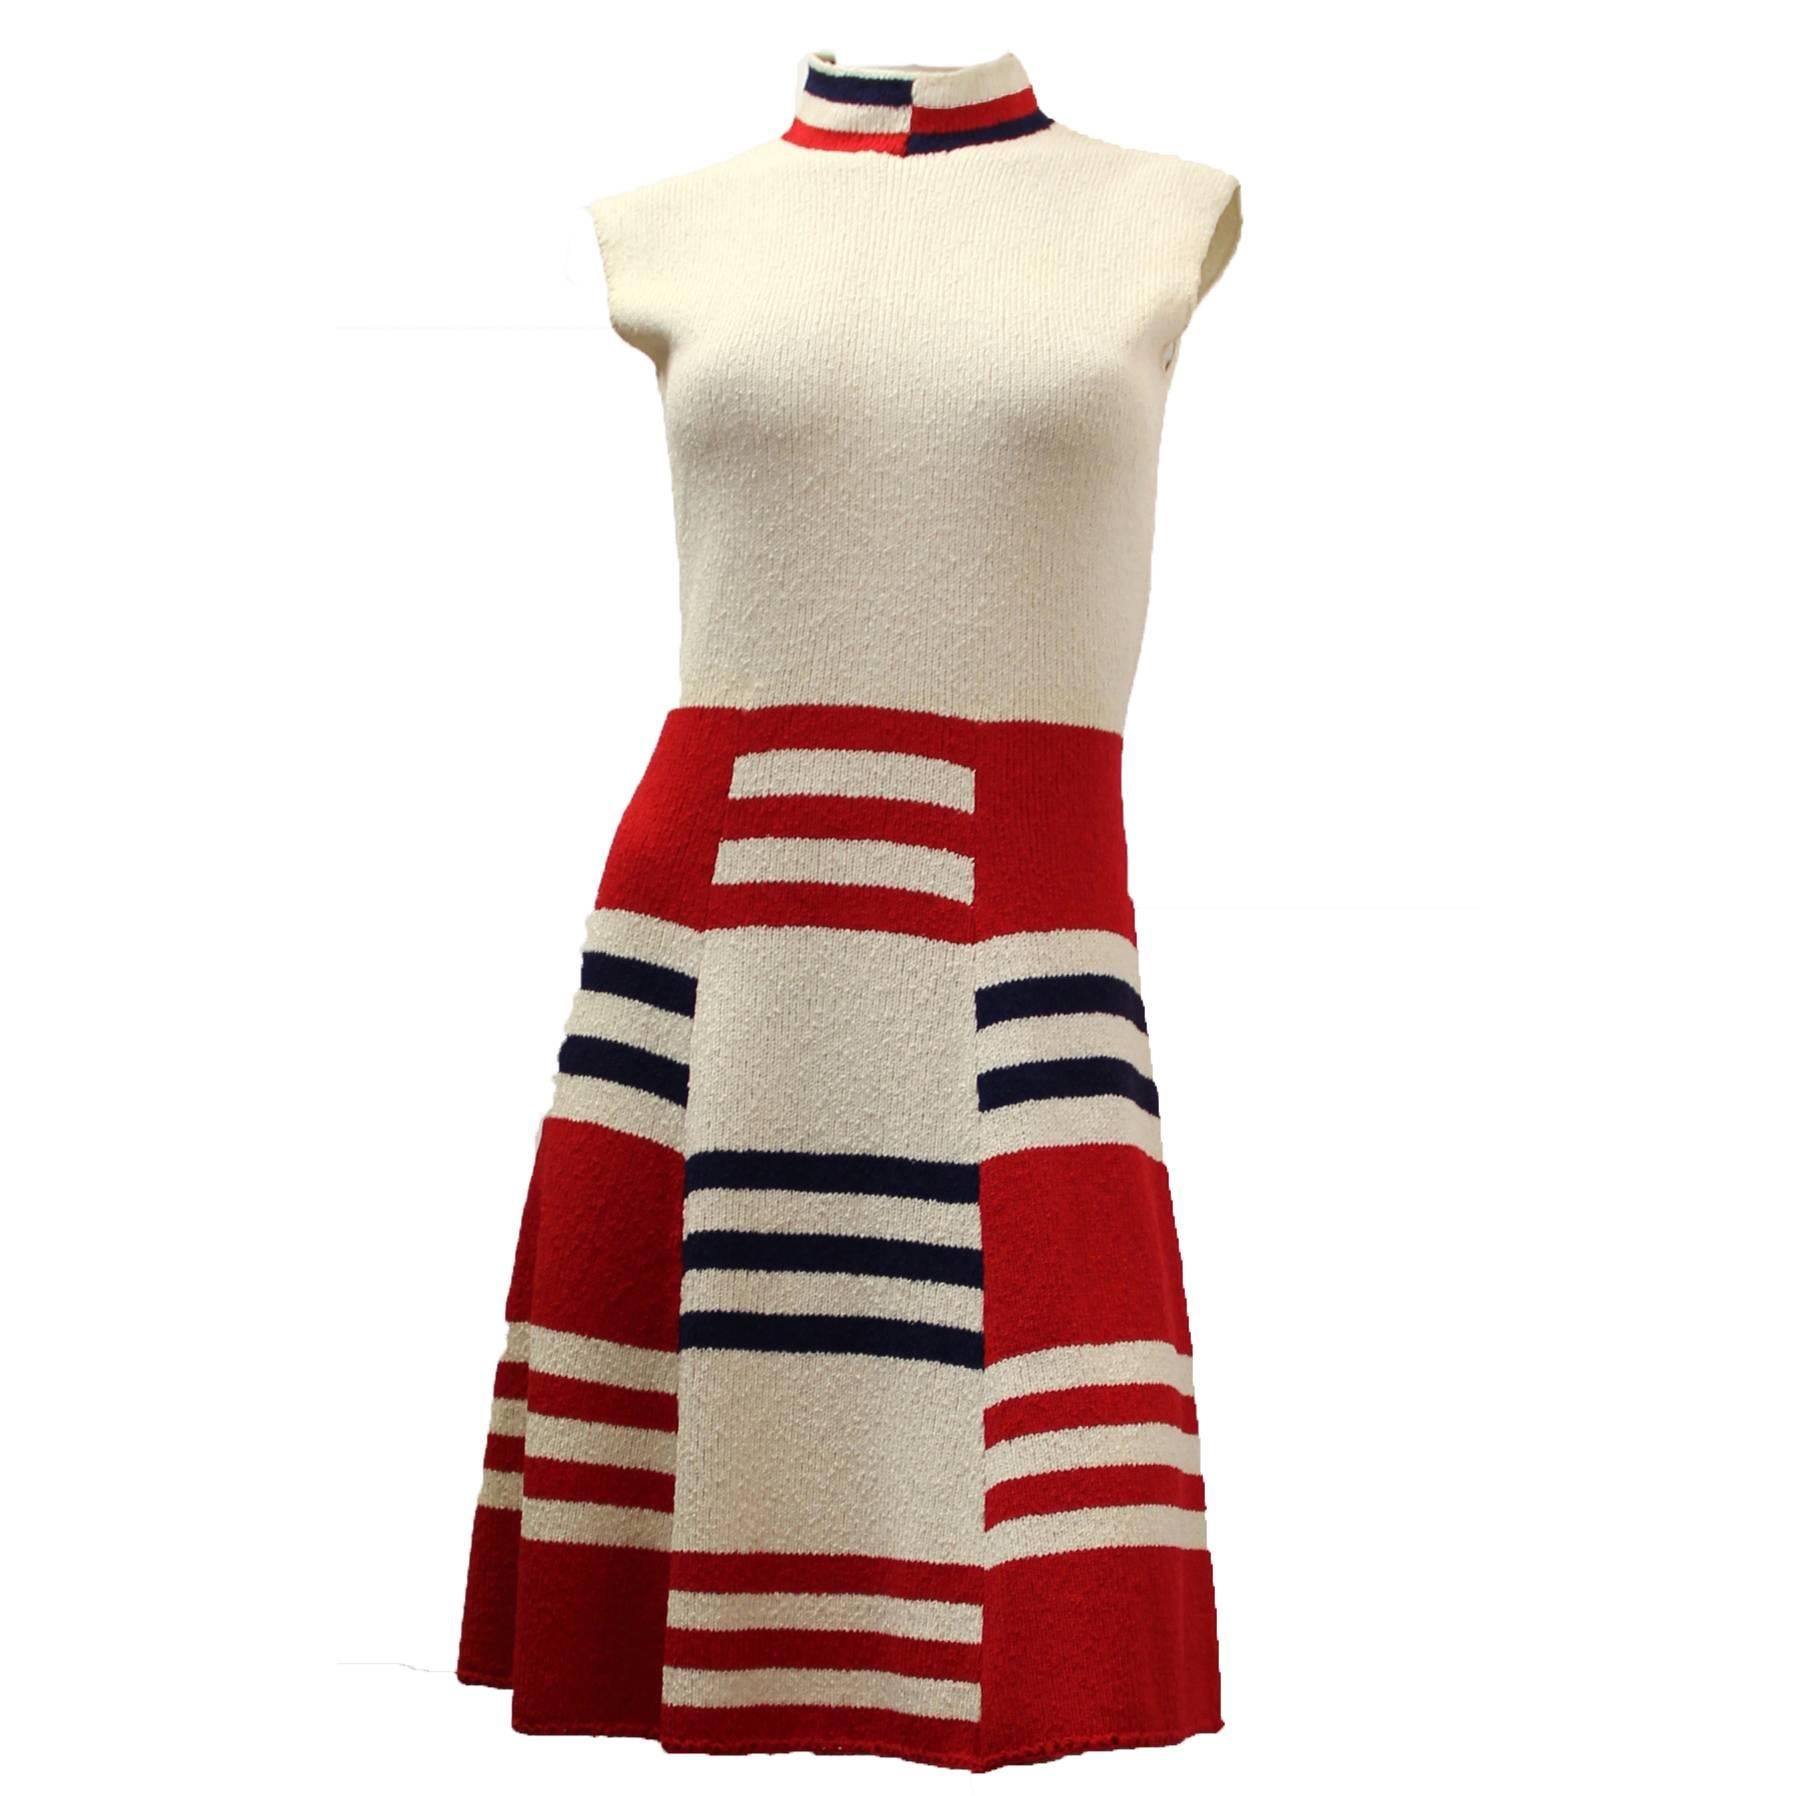 1960s Mod Red White & Blue Dress